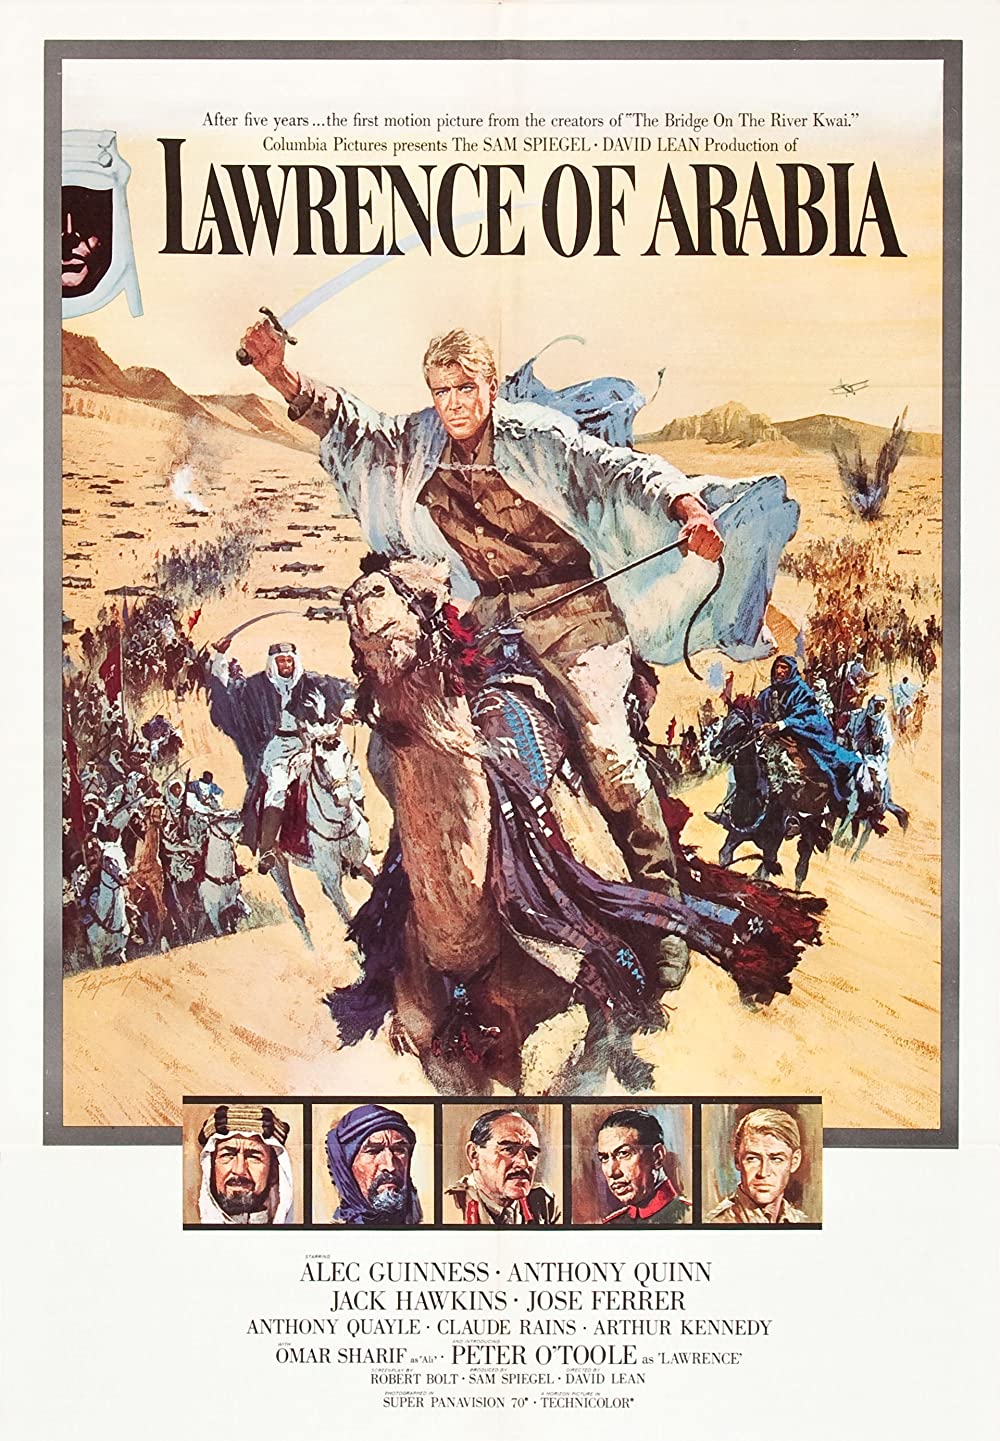 Filmbeschreibung zu Lawrence of Arabia